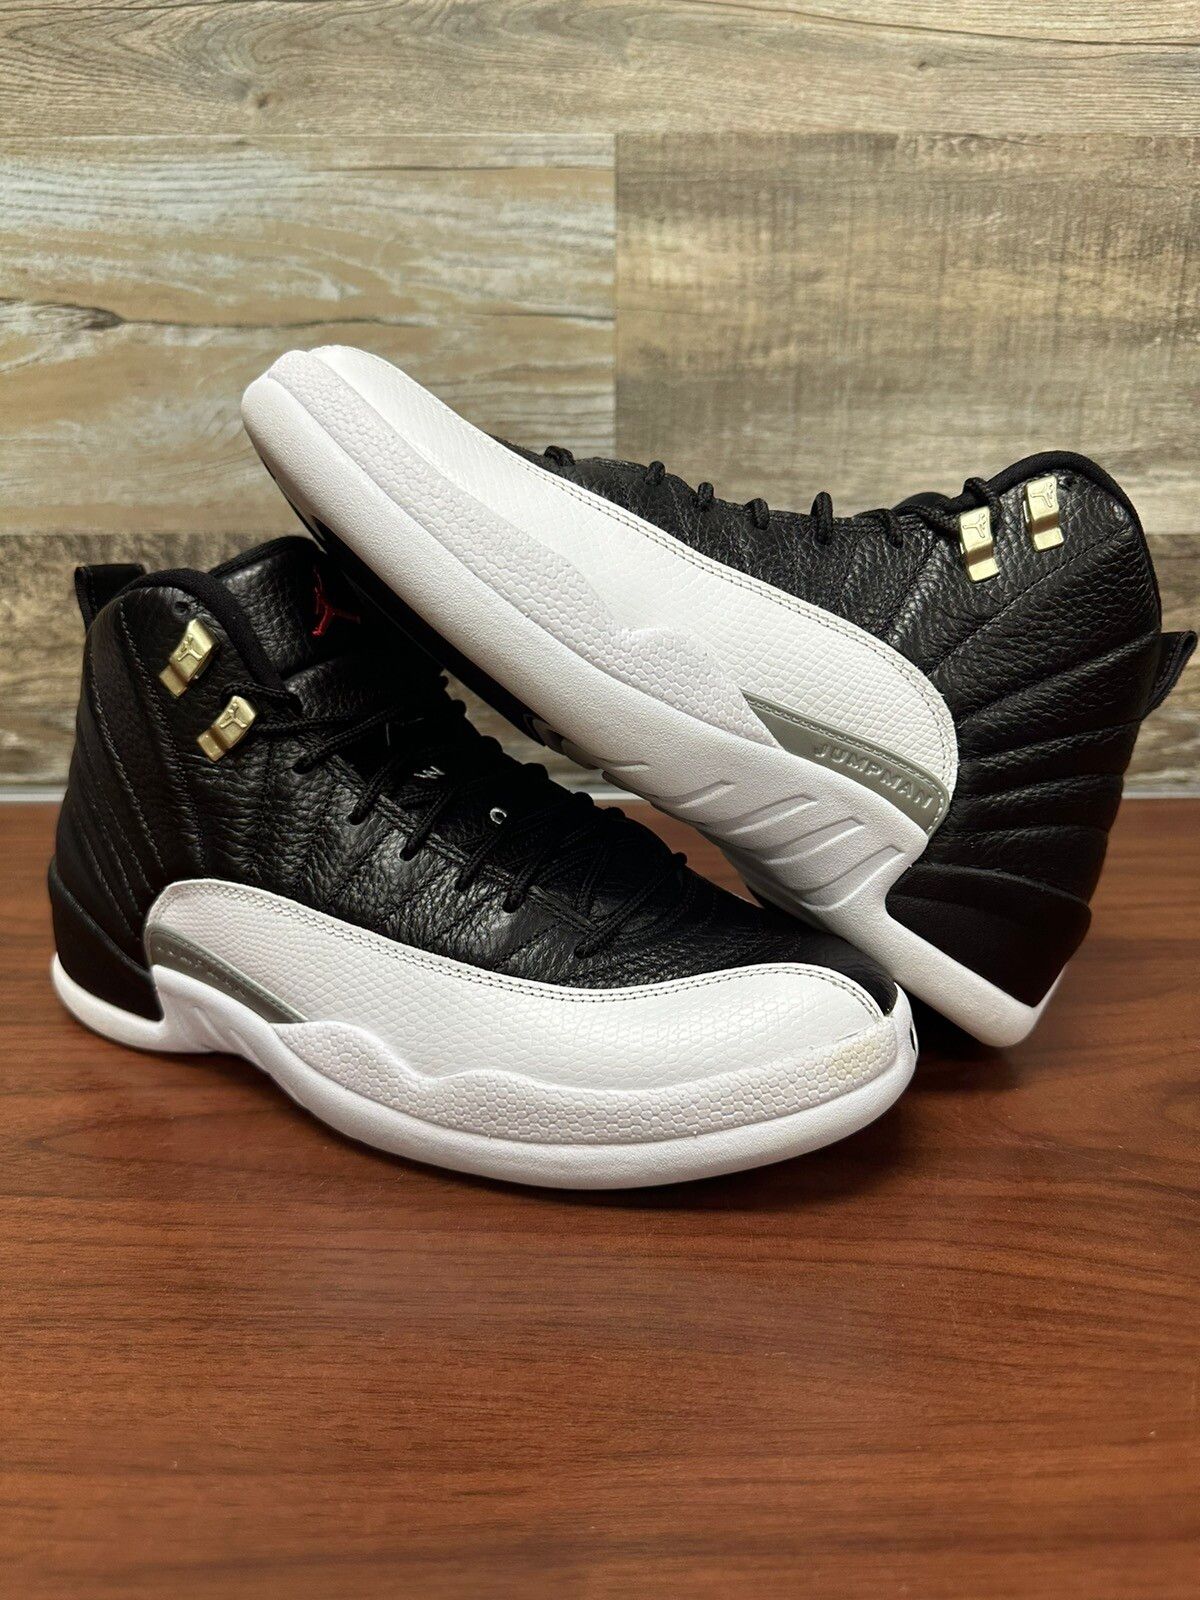 Pre-owned Jordan Nike Air Jordan 12 Playoffs Size 10 Shoes In Black